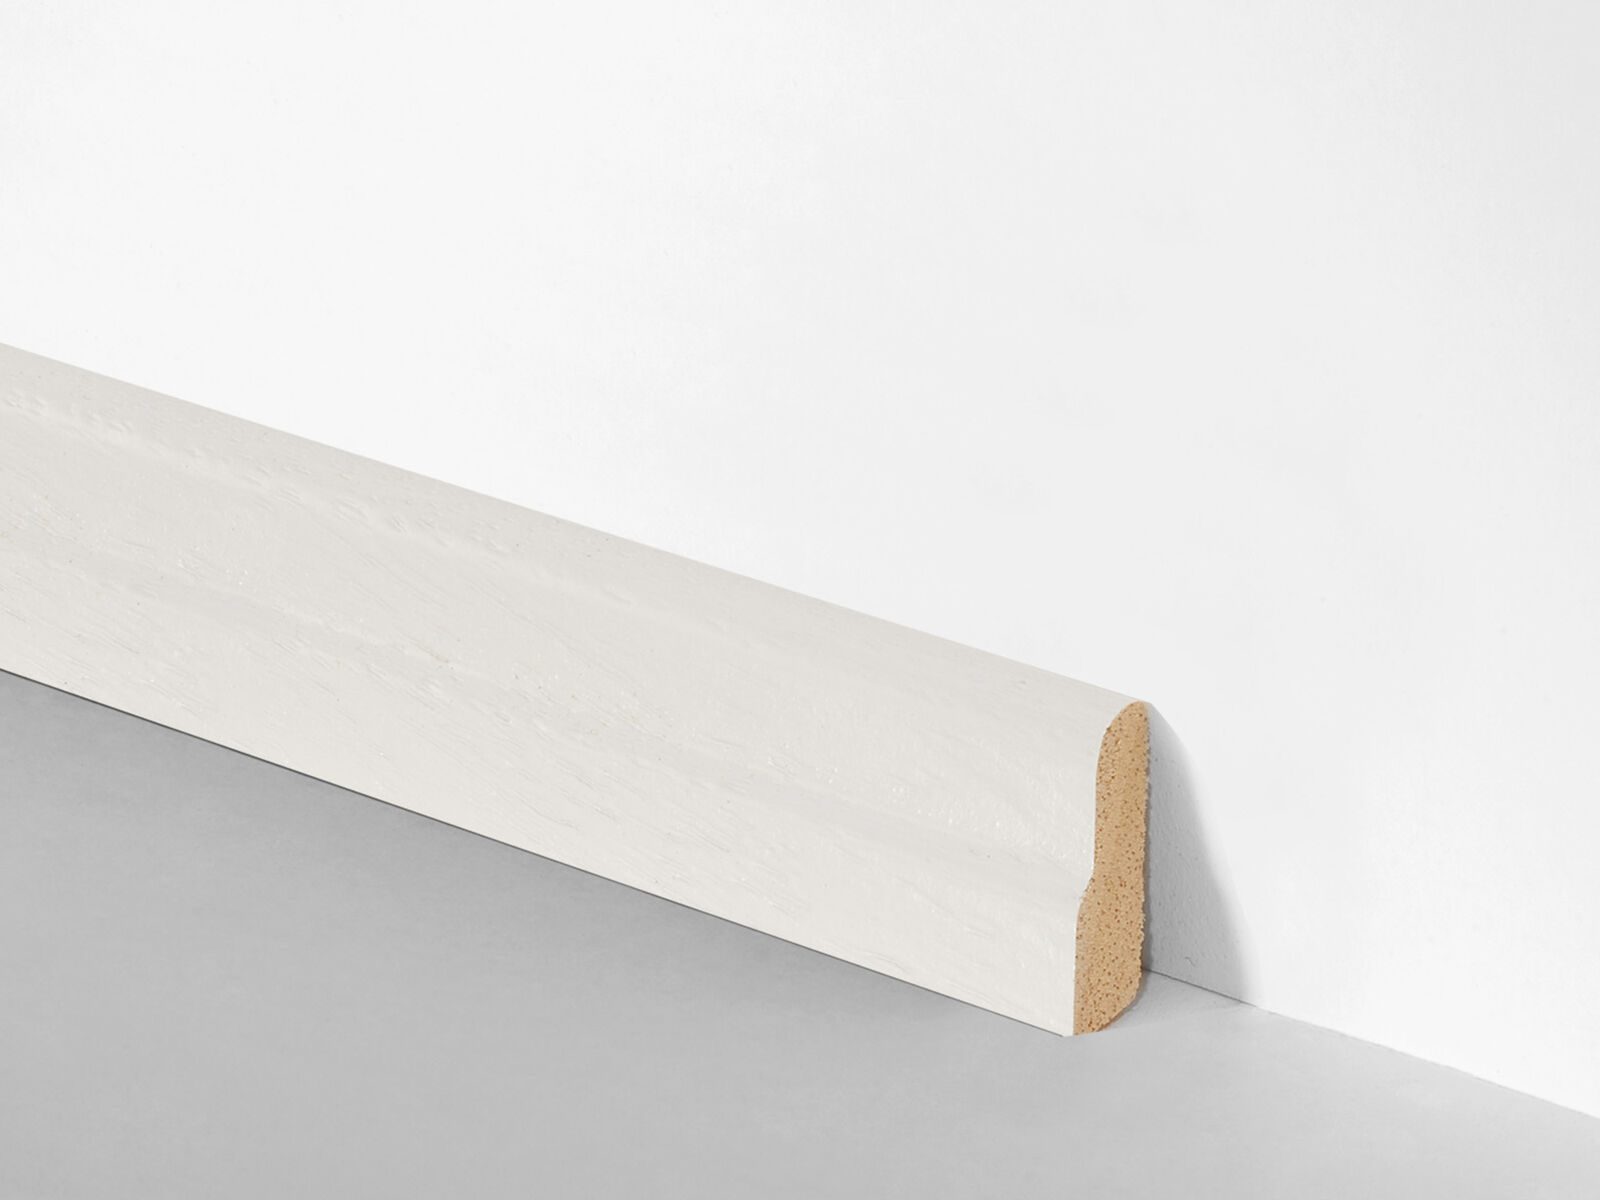 Sockelleiste 7x23mm | Massivholz weiß lackiert | 240cm lang | 75150117